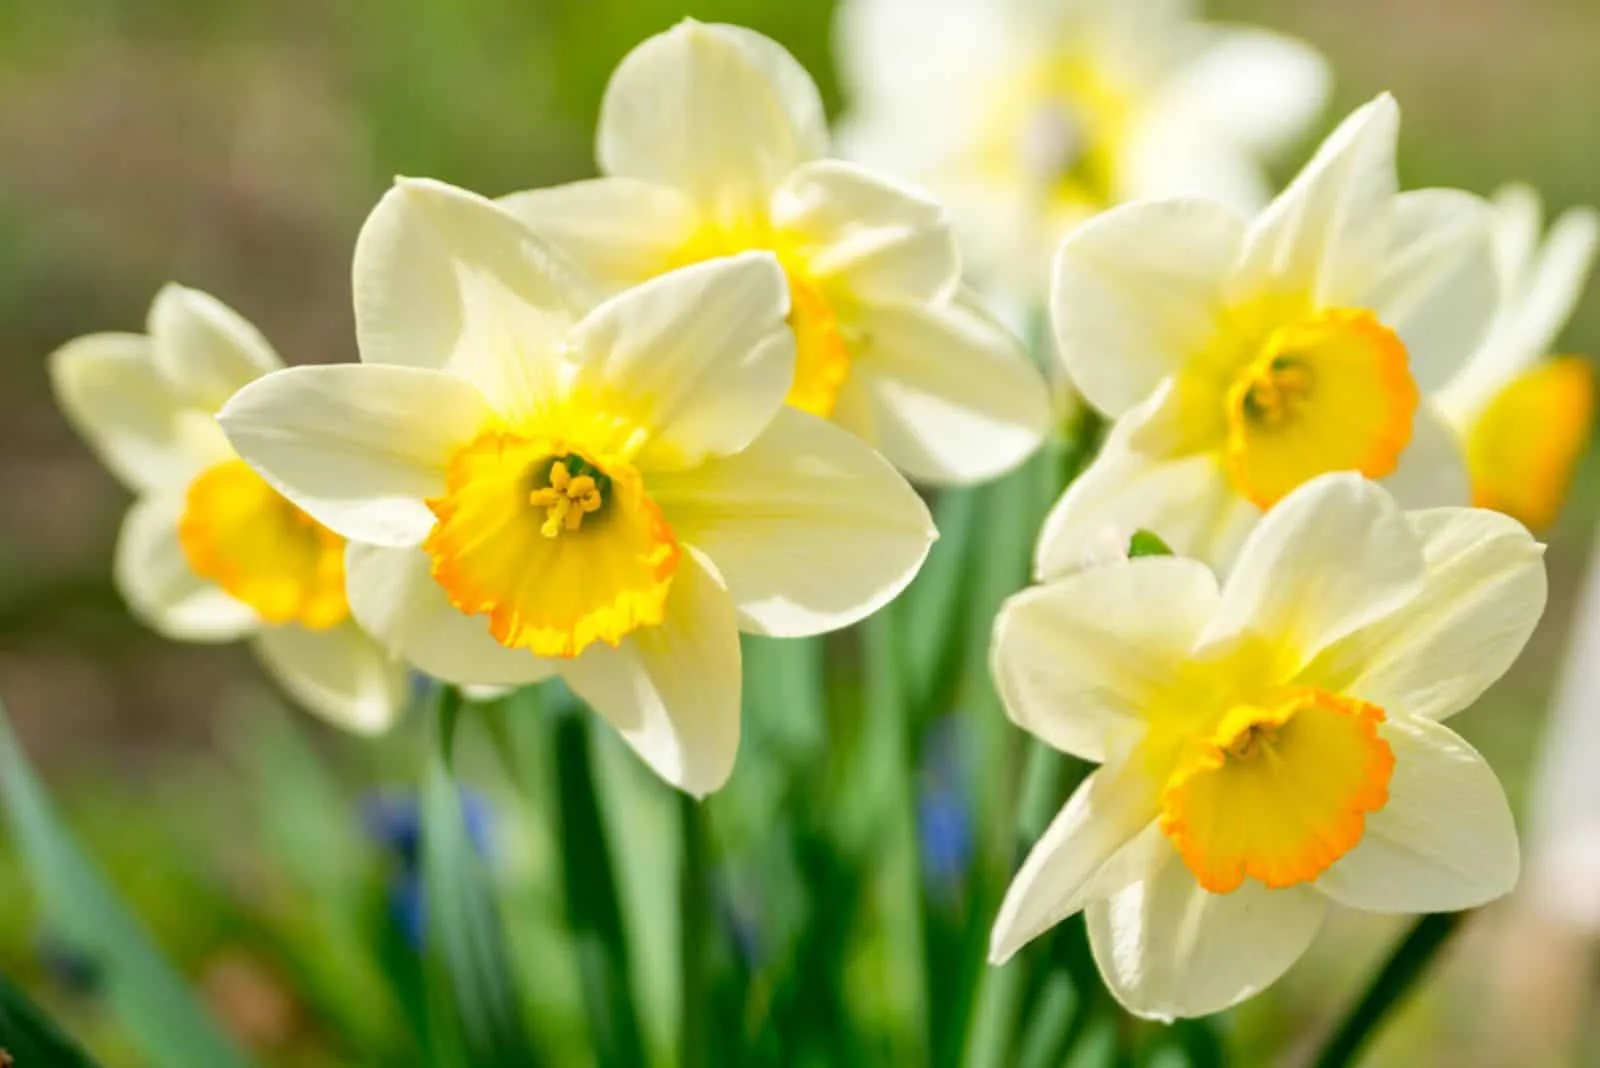 Daffodils in a sunny spring garden